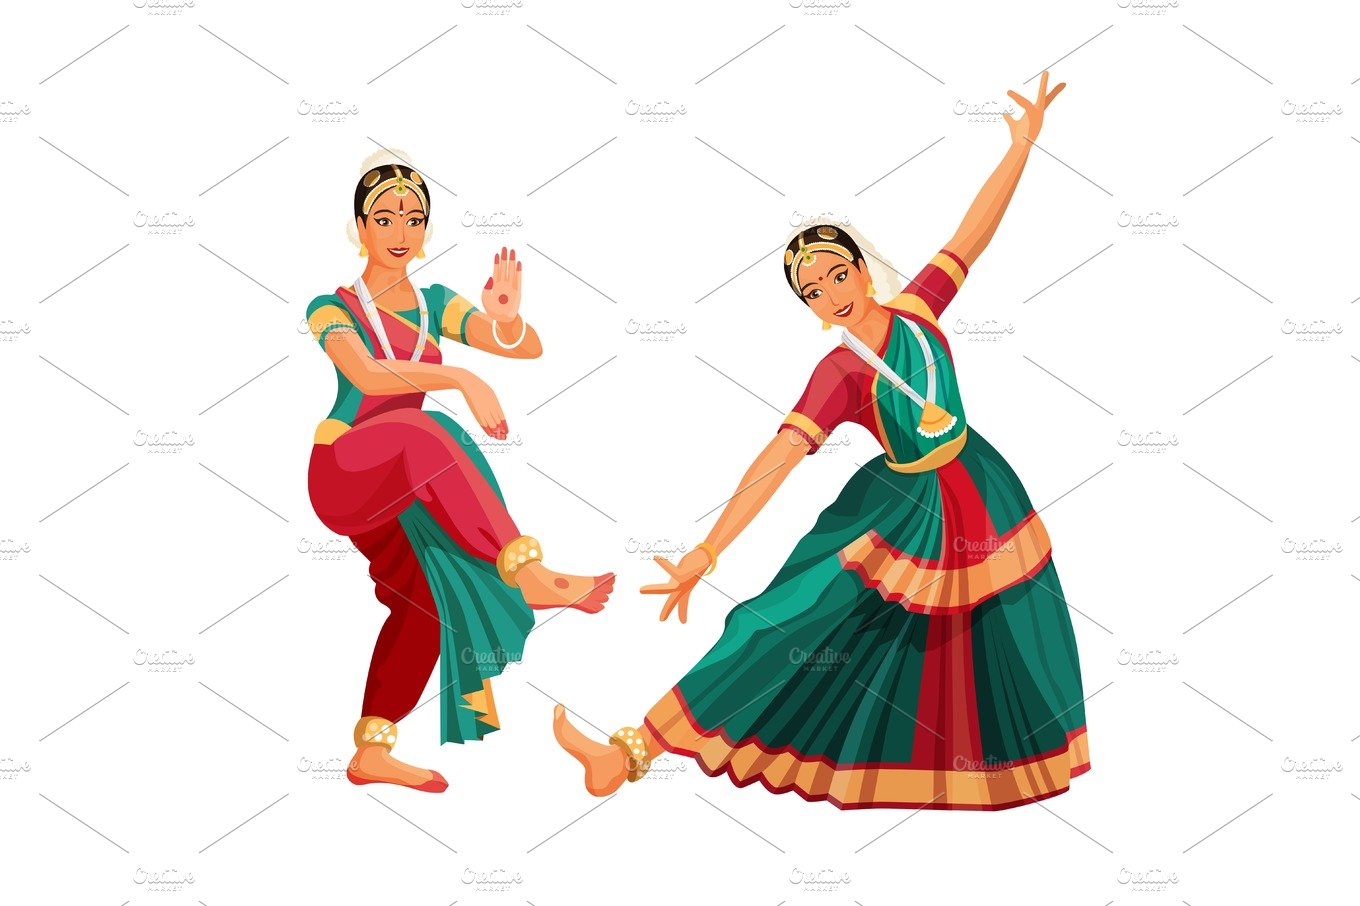 Woman dancer in national indian cloth dancing Bharatanatyam folk dance cover image.